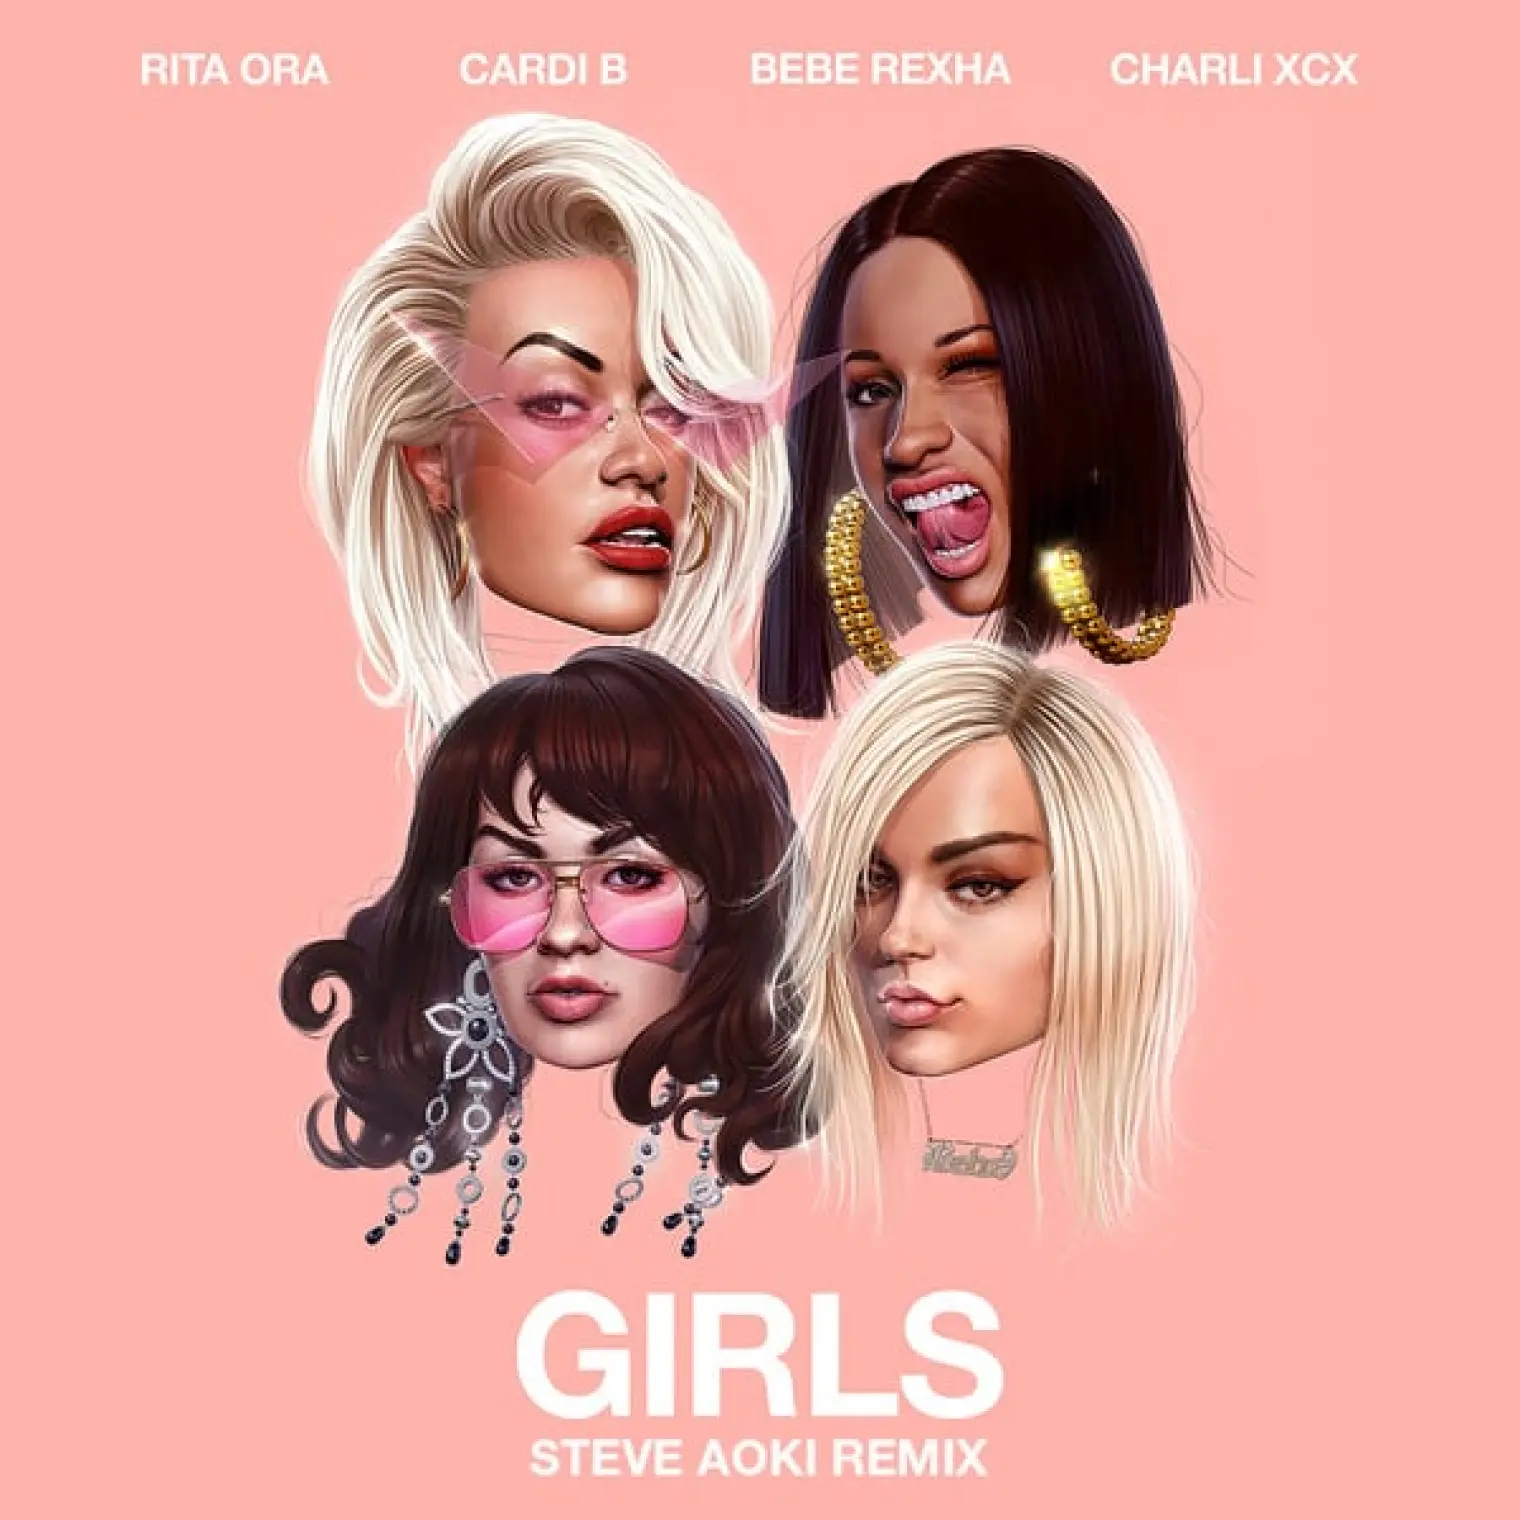 Girls (feat. Cardi B, Bebe Rexha & Charli XCX) (Steve Aoki Remix) -  Rita Ora 